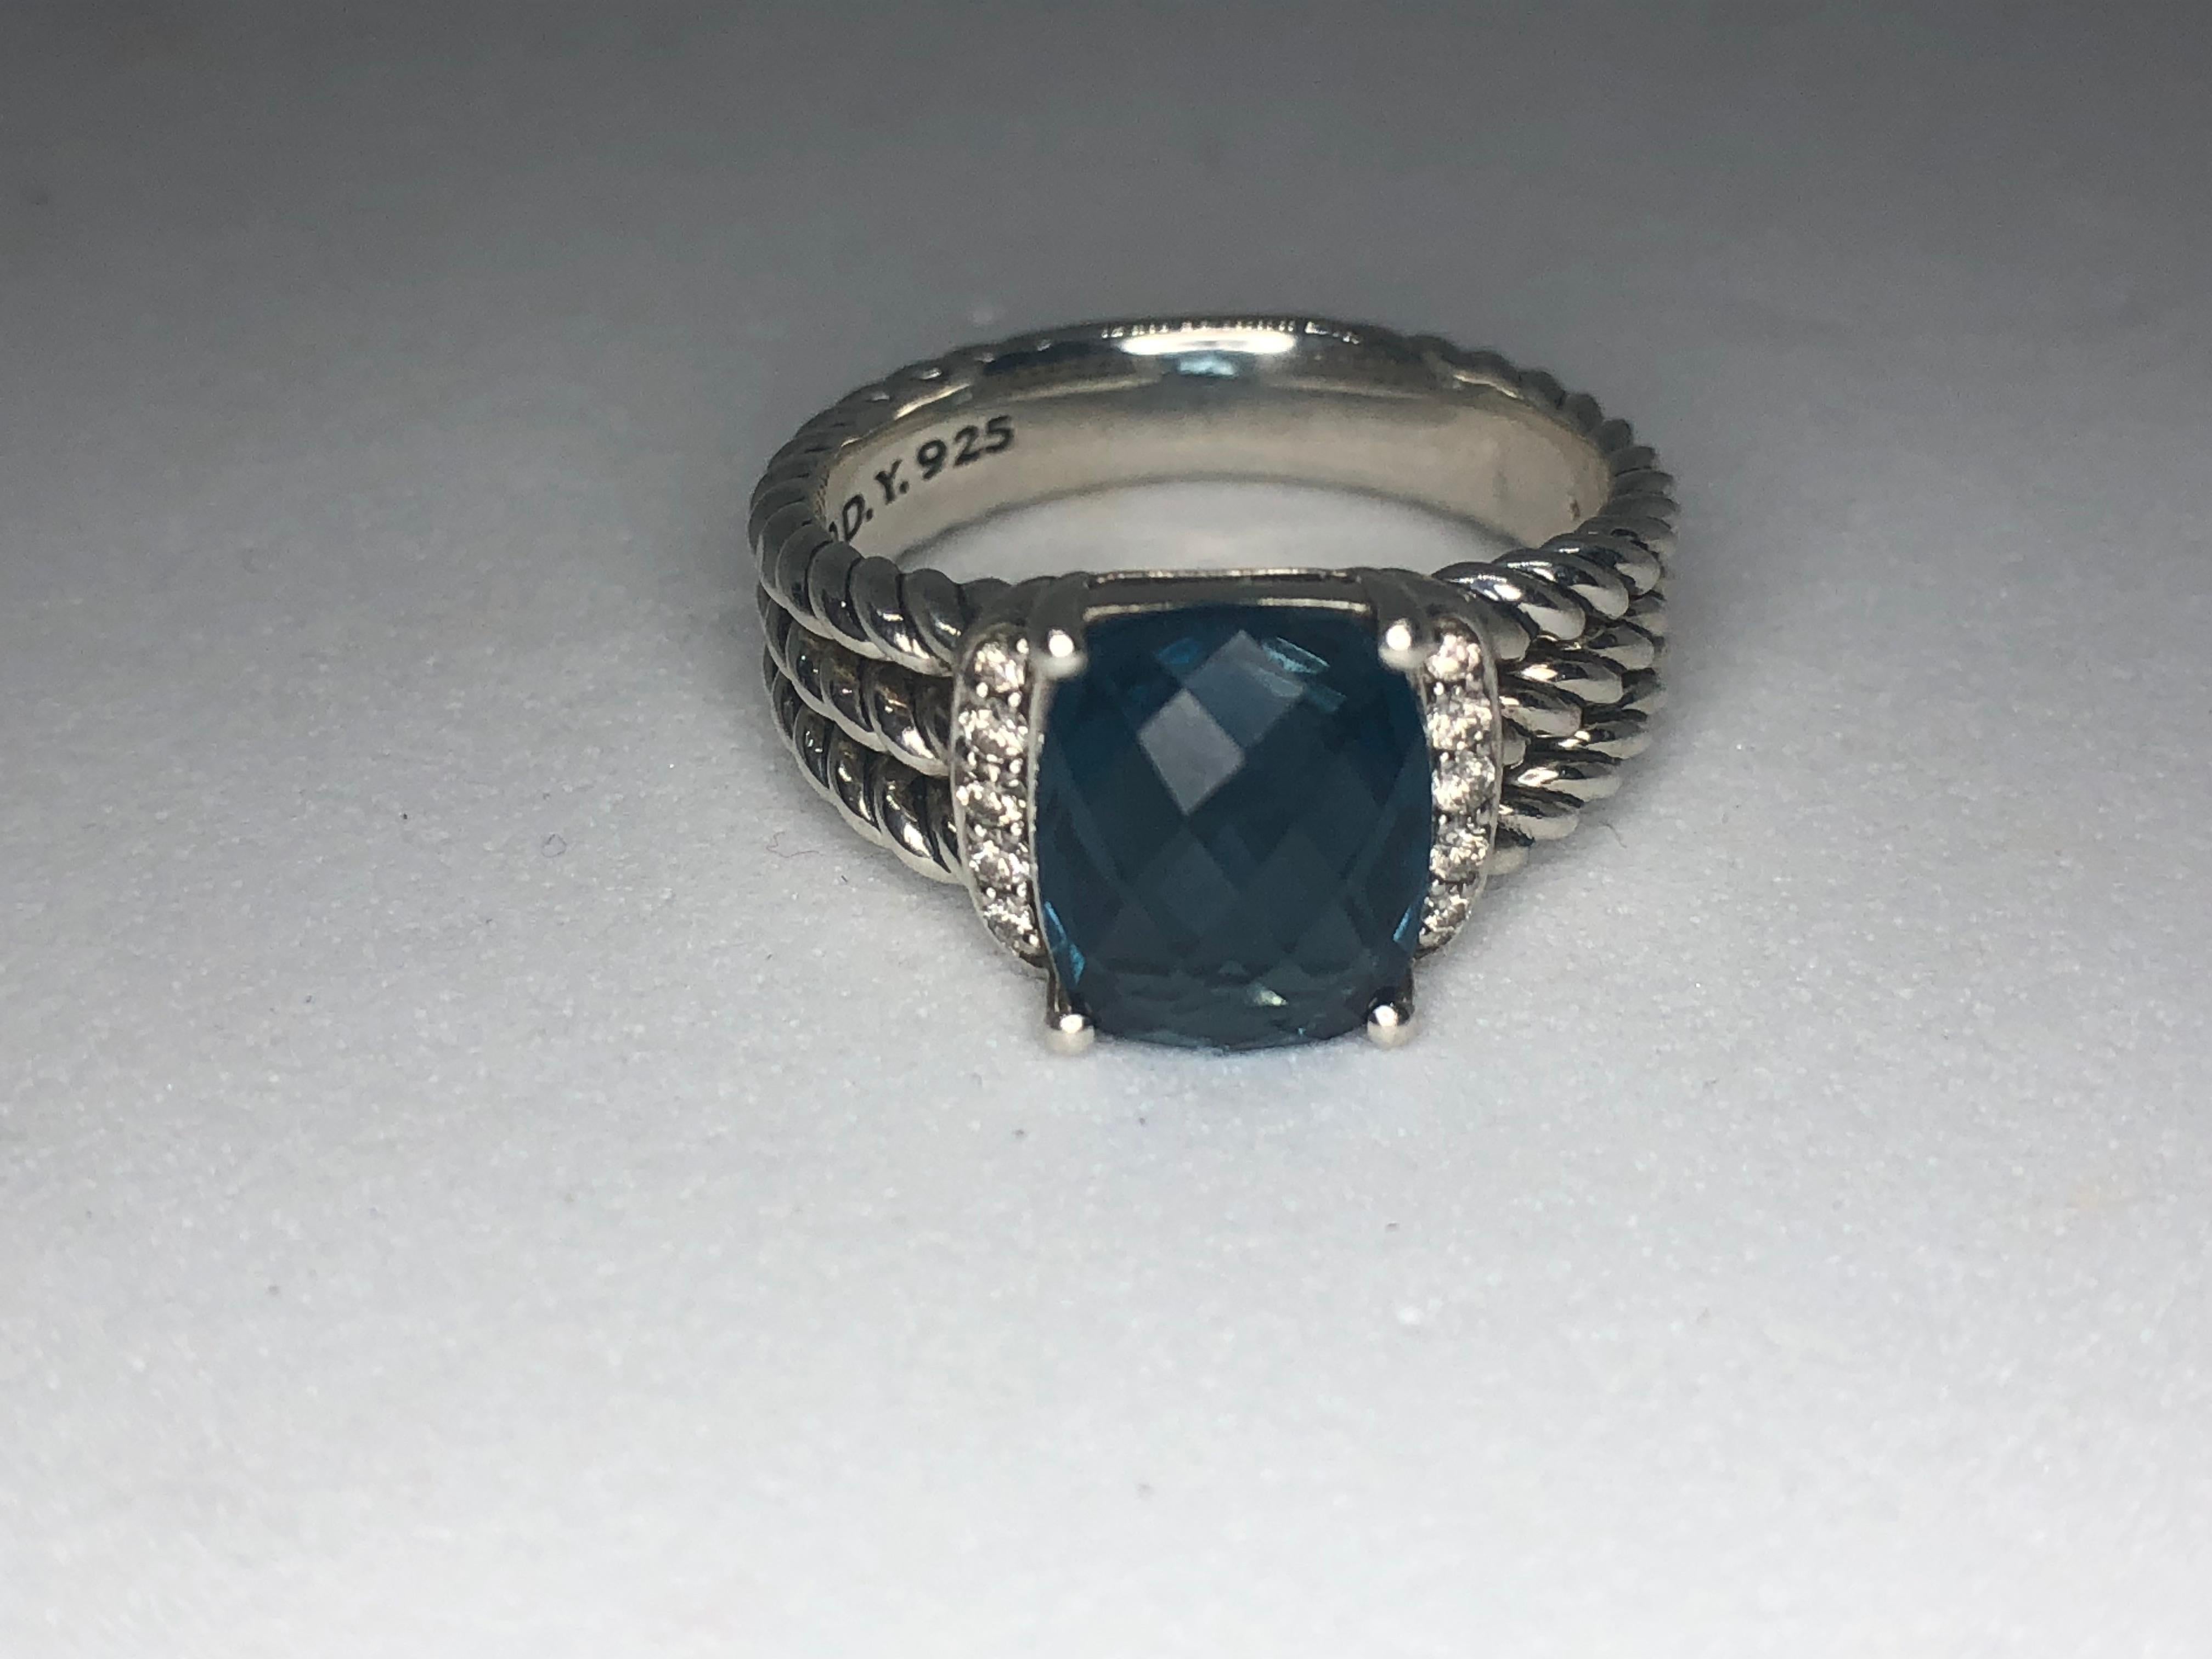 Lady's sterling silver london blue topaz ring accompanied by 10 diamonds by David Yurman. Style is 